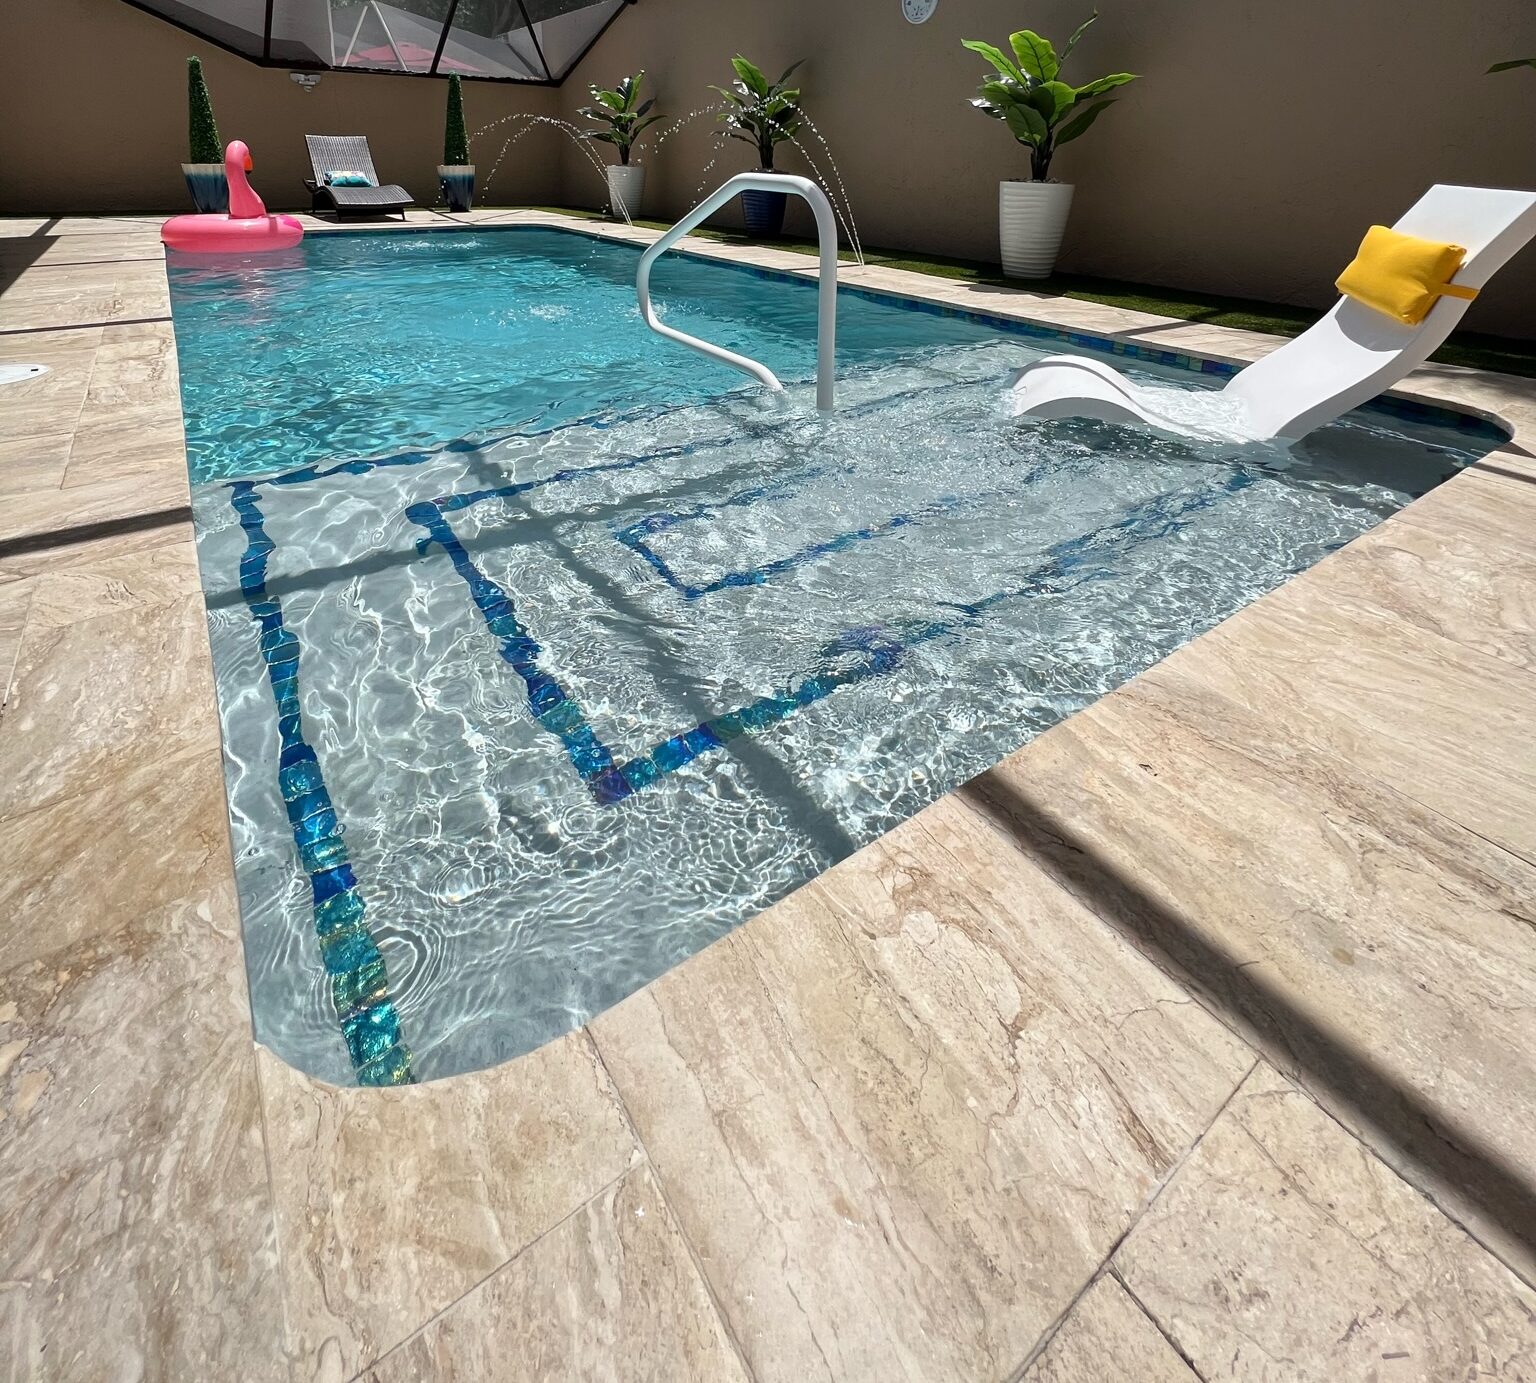 New Pool Construction with sun shelf